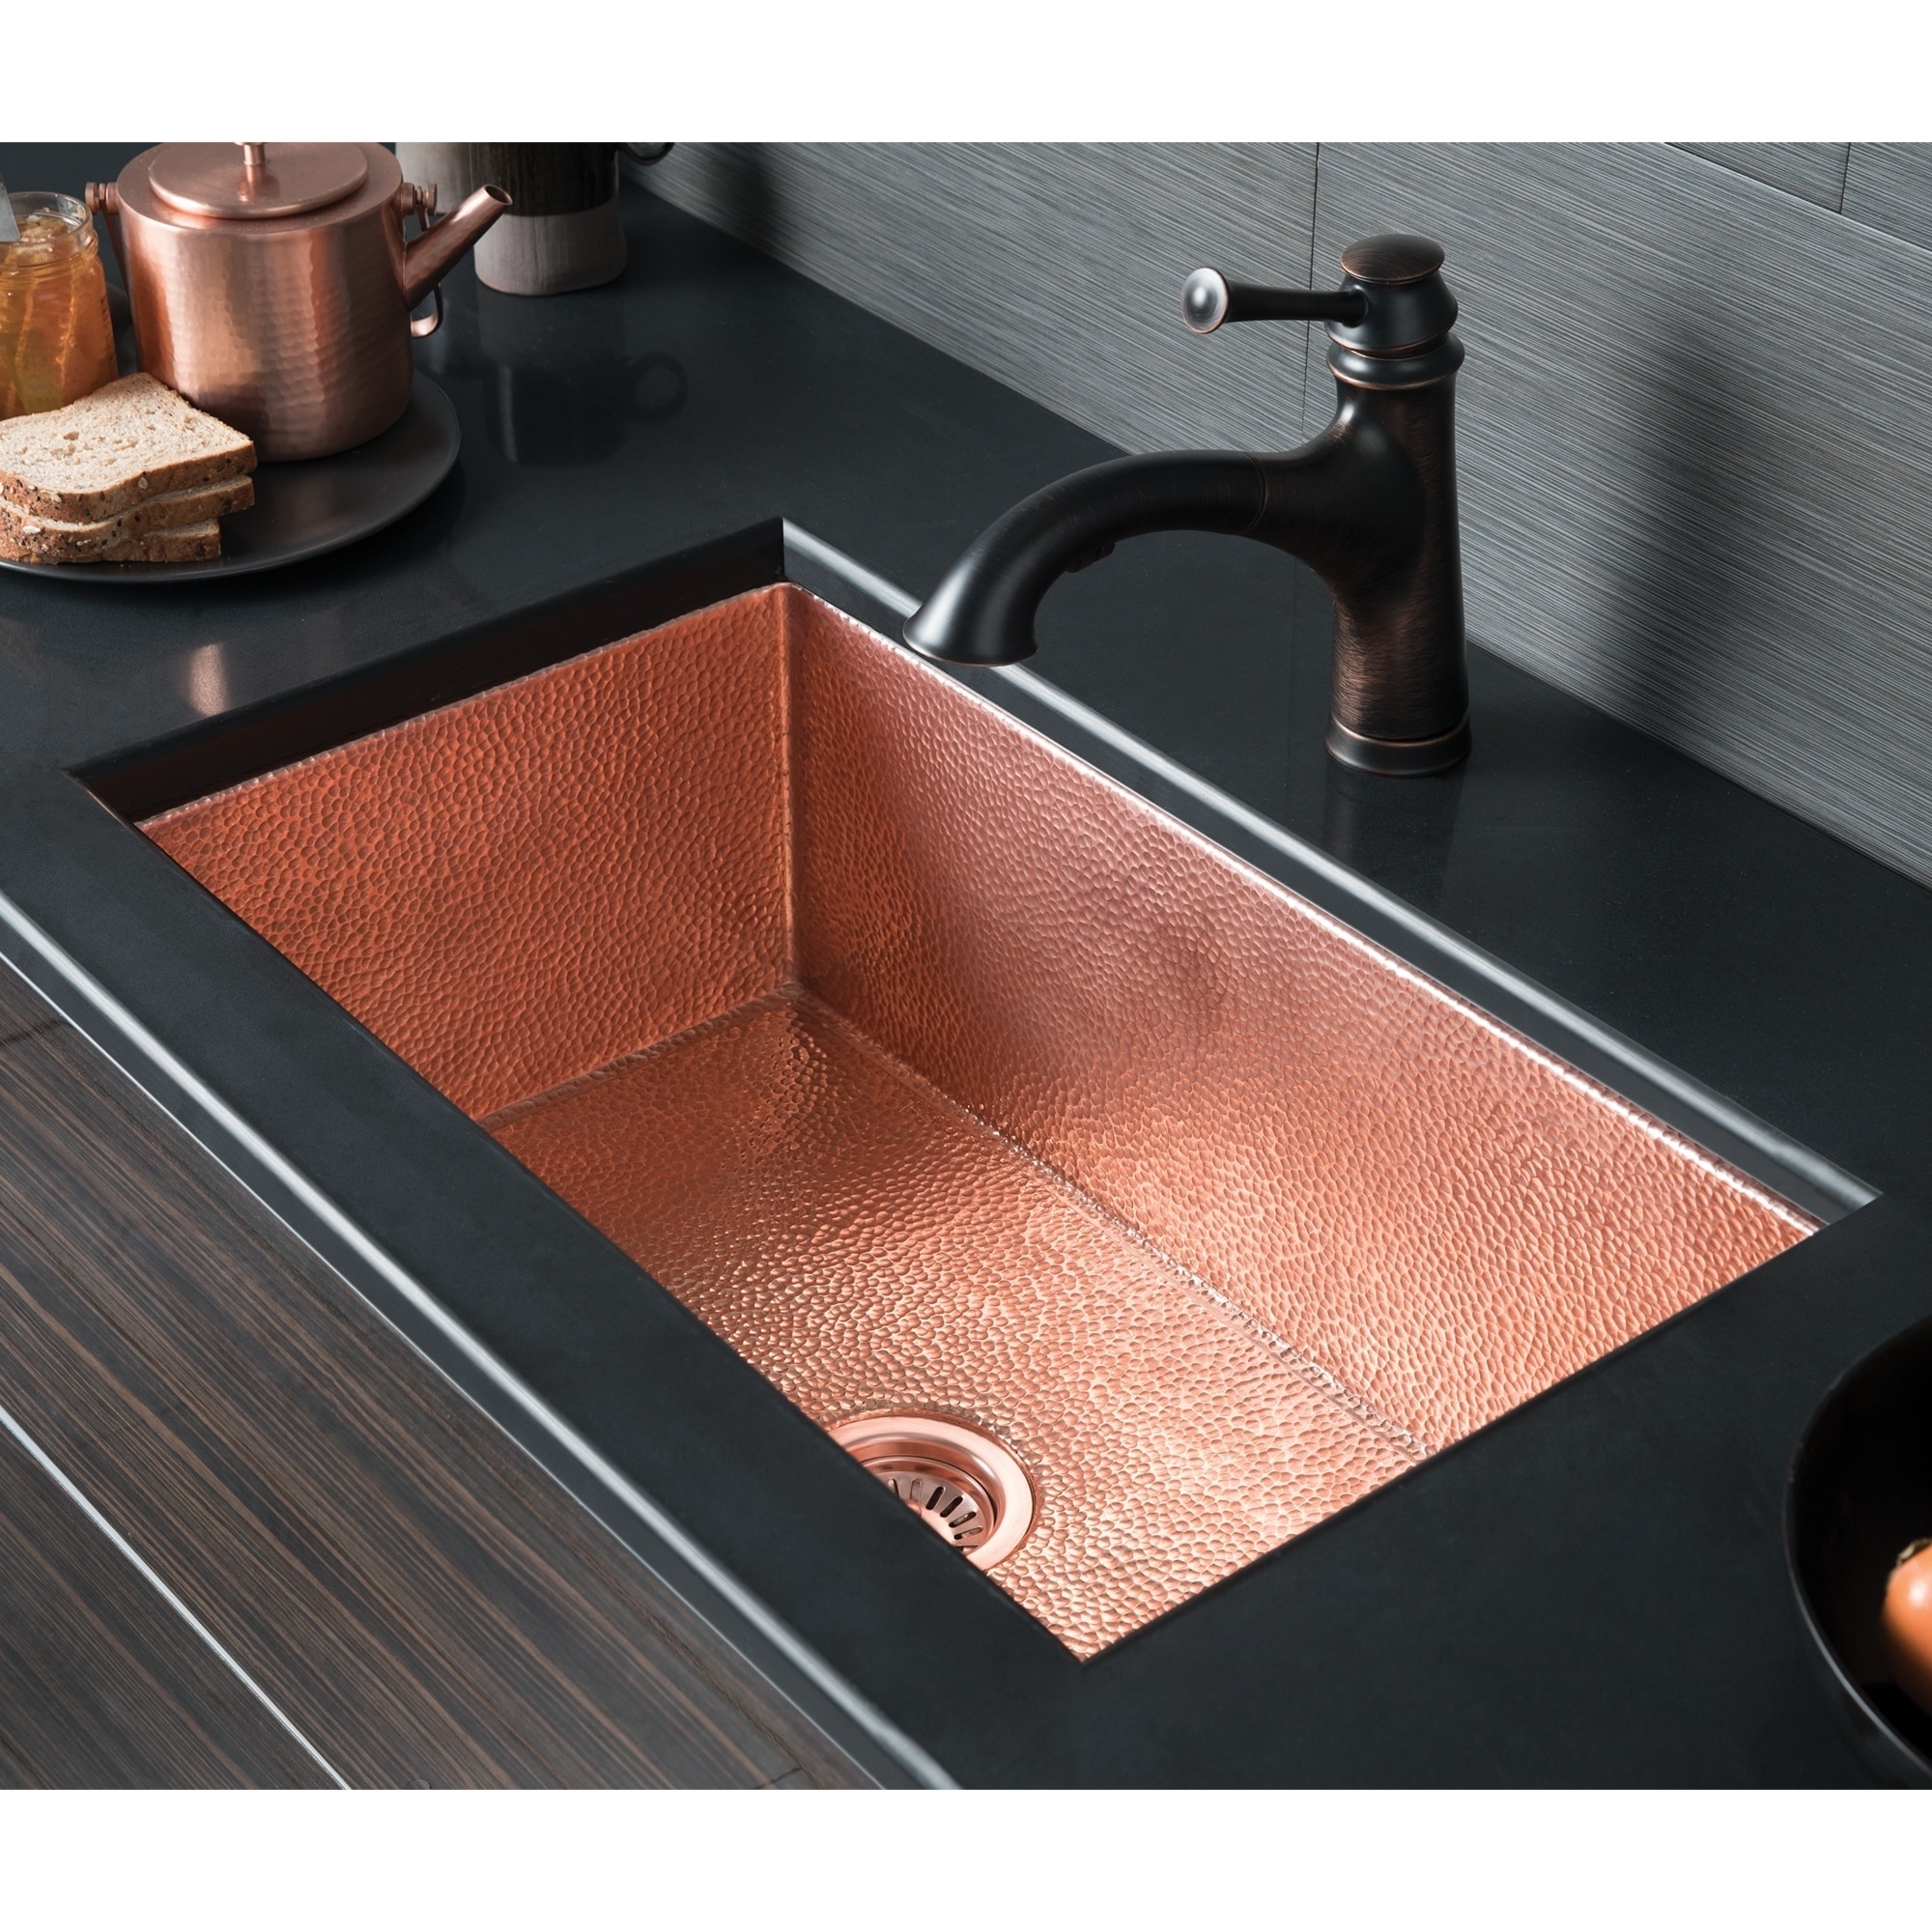 Shop Black Friday Deals On Cocina Hammered Polished Copper 30 Inch Undermount Kitchen Sink Overstock 18235241